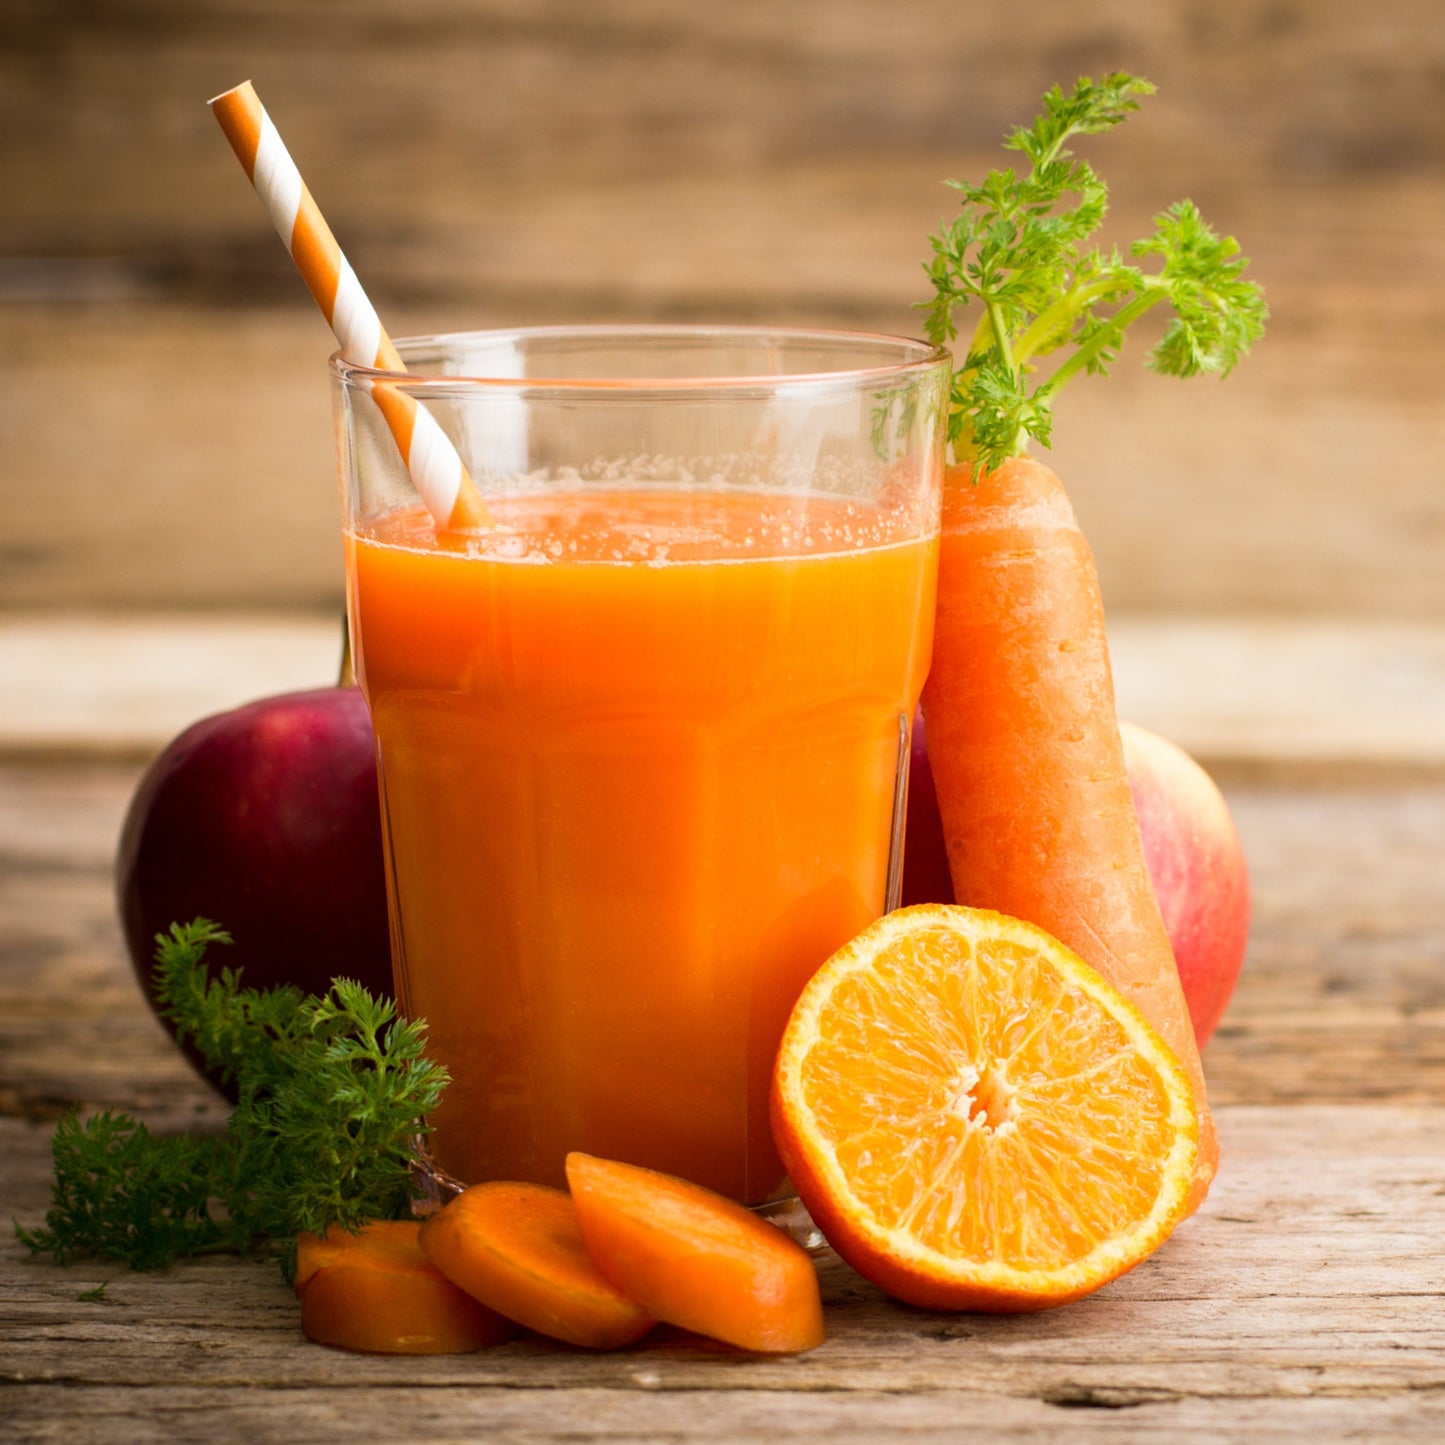 Housemade Organic Carrot Juice